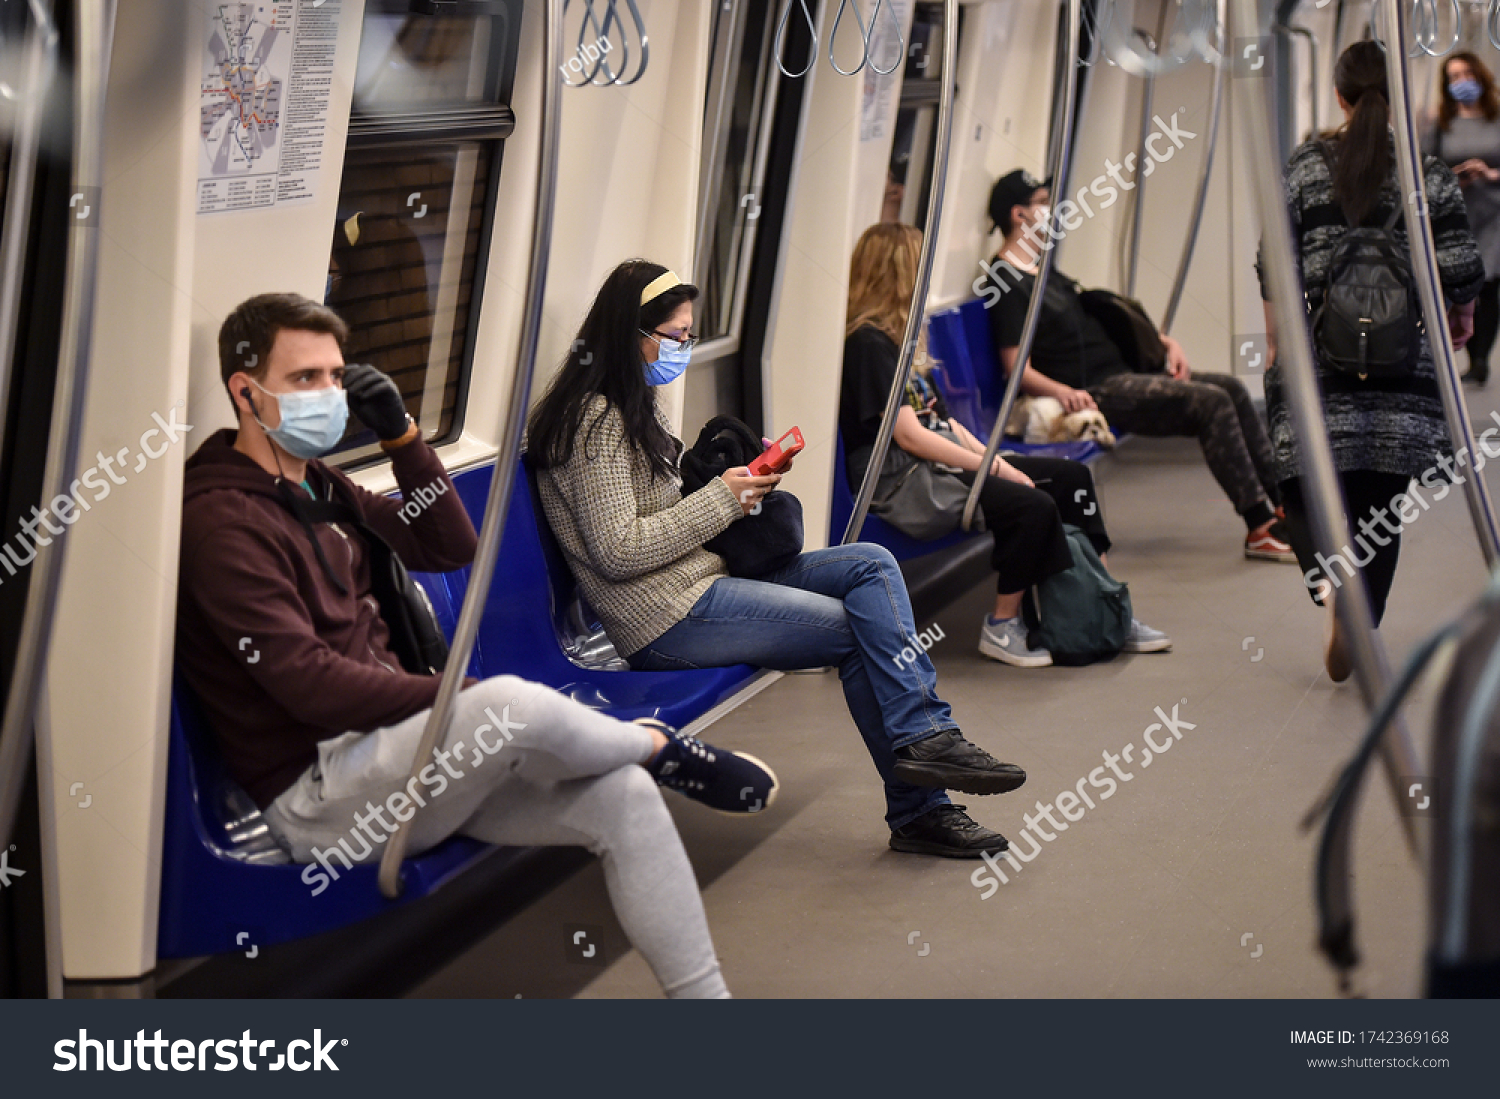 BUCHAREST, ROMANIA - MAY 15, 2020: Subway scene with daily life during the corona virus pandemic in Bucharest. #1742369168